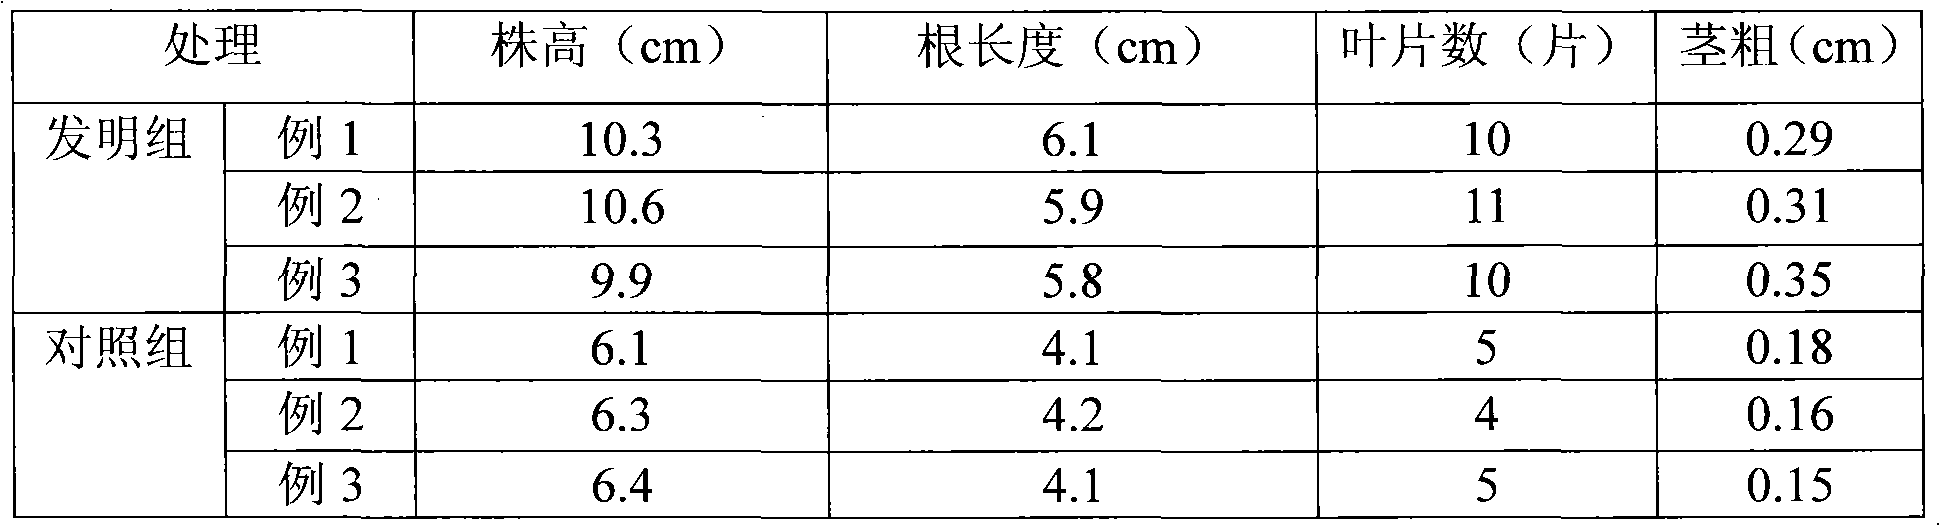 Cyclamen cultivation matrix